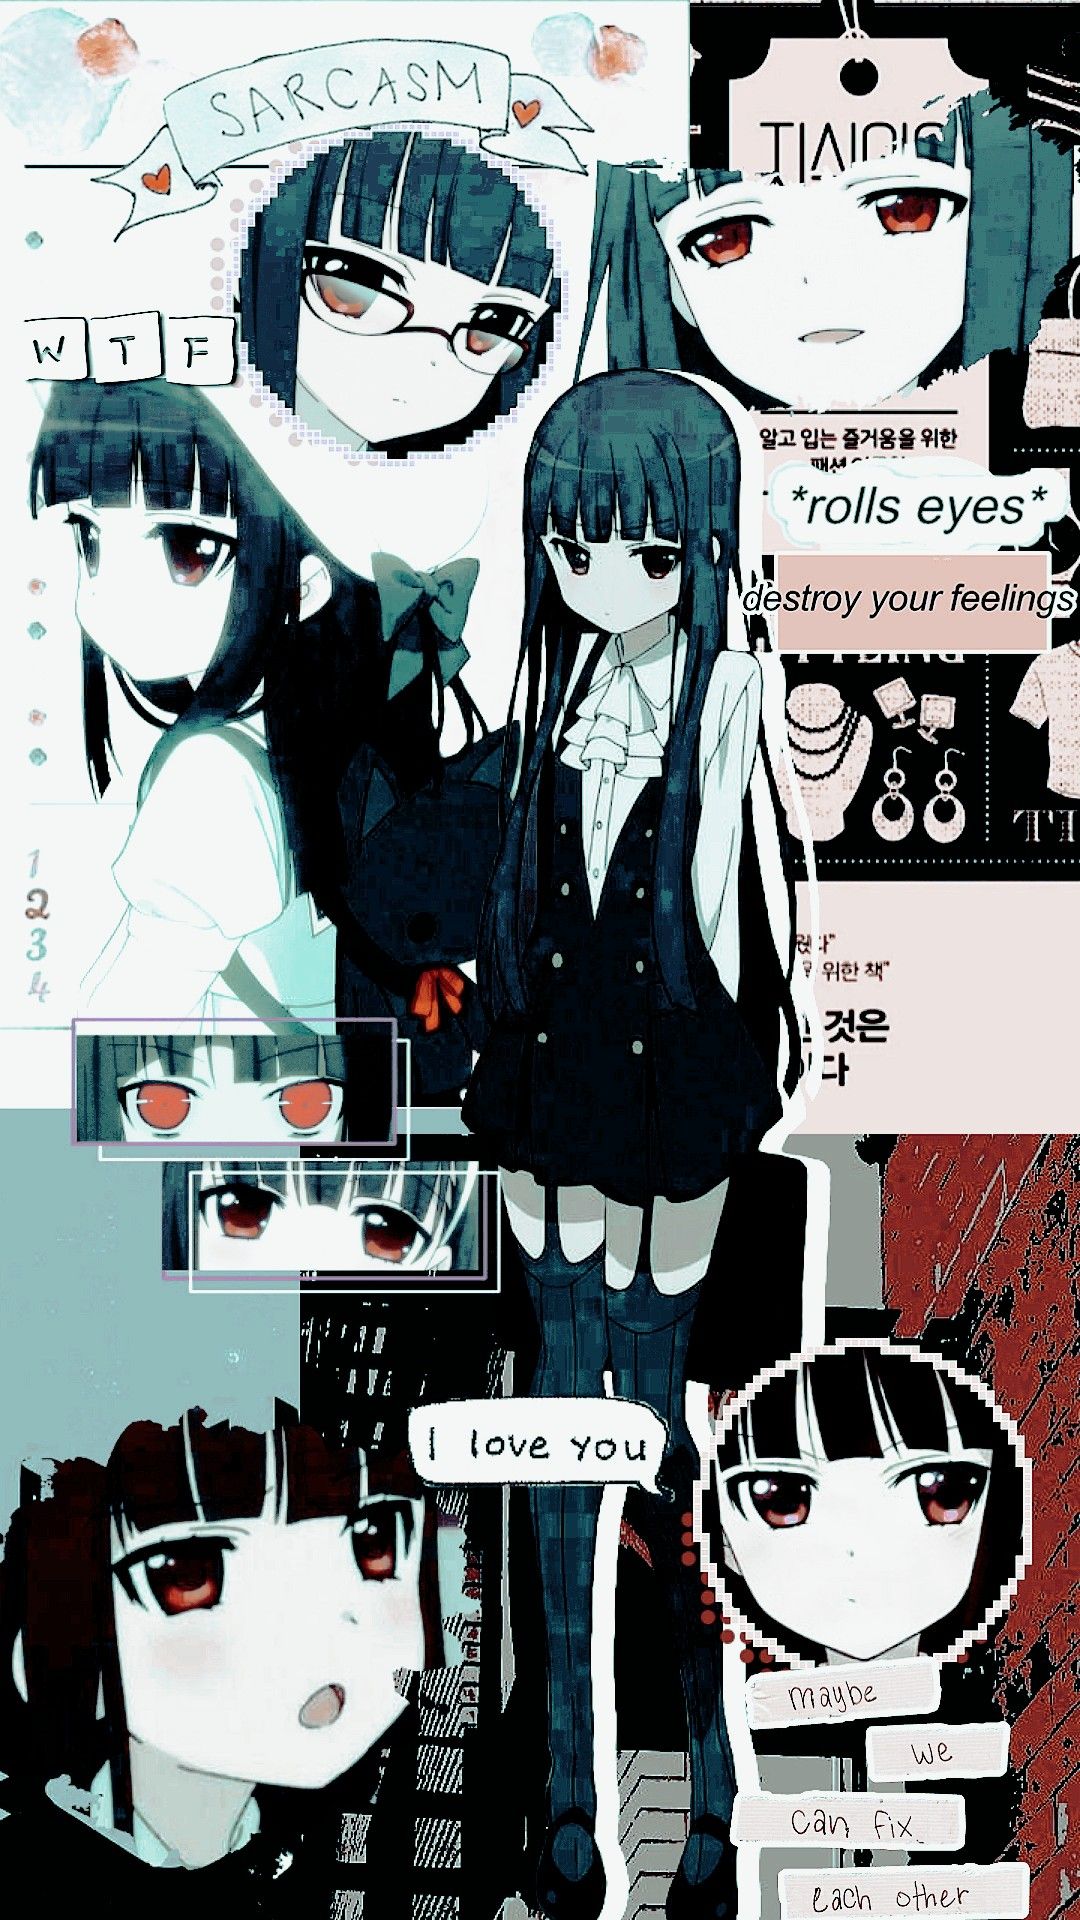 Ririchiyo Shirakiin Anime Wallpapers